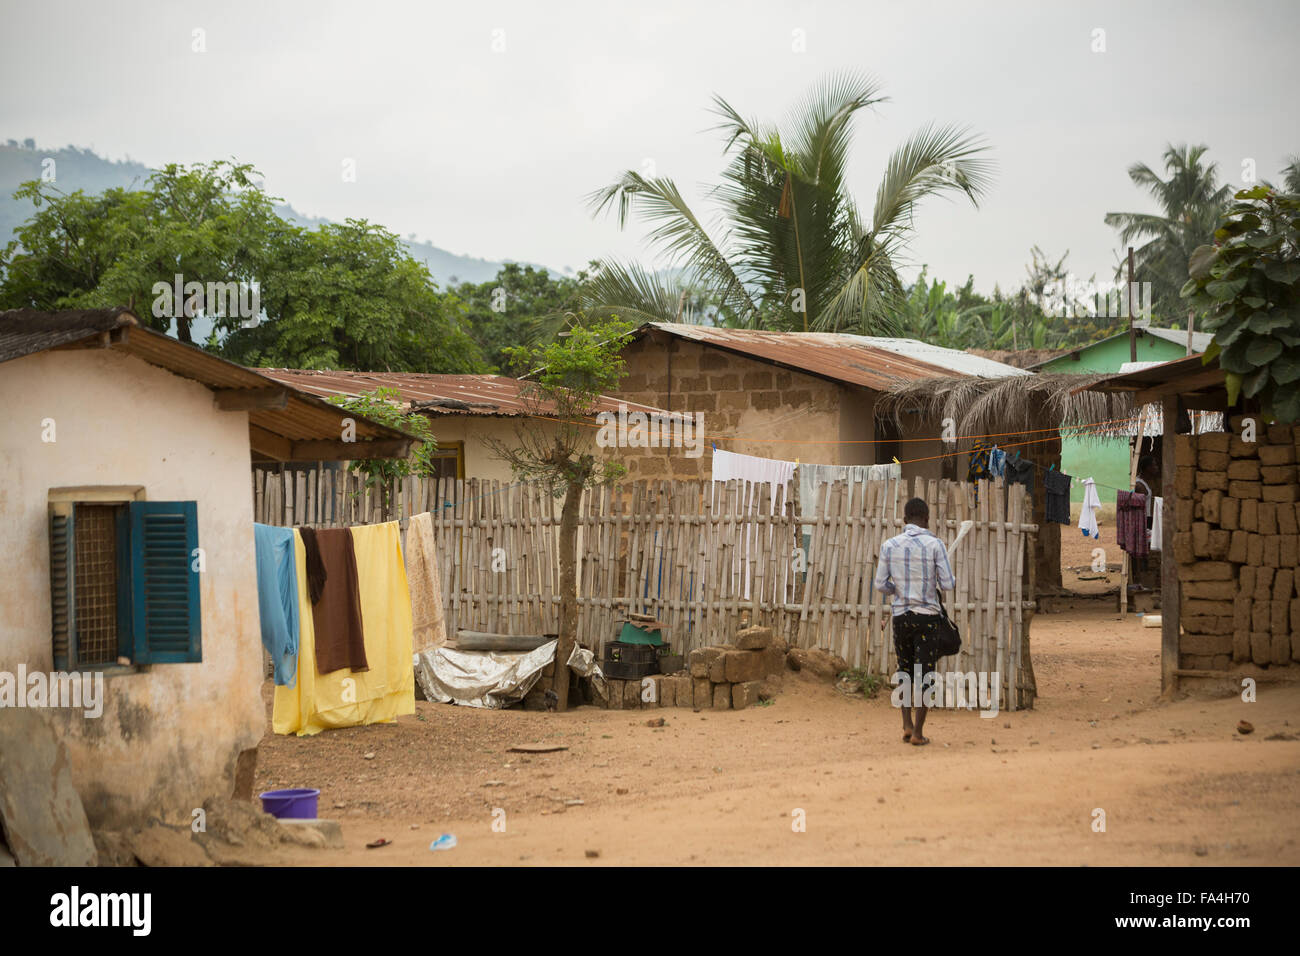 Neighborhood scene - Fotobi village, Southeast Ghana. Stock Photo